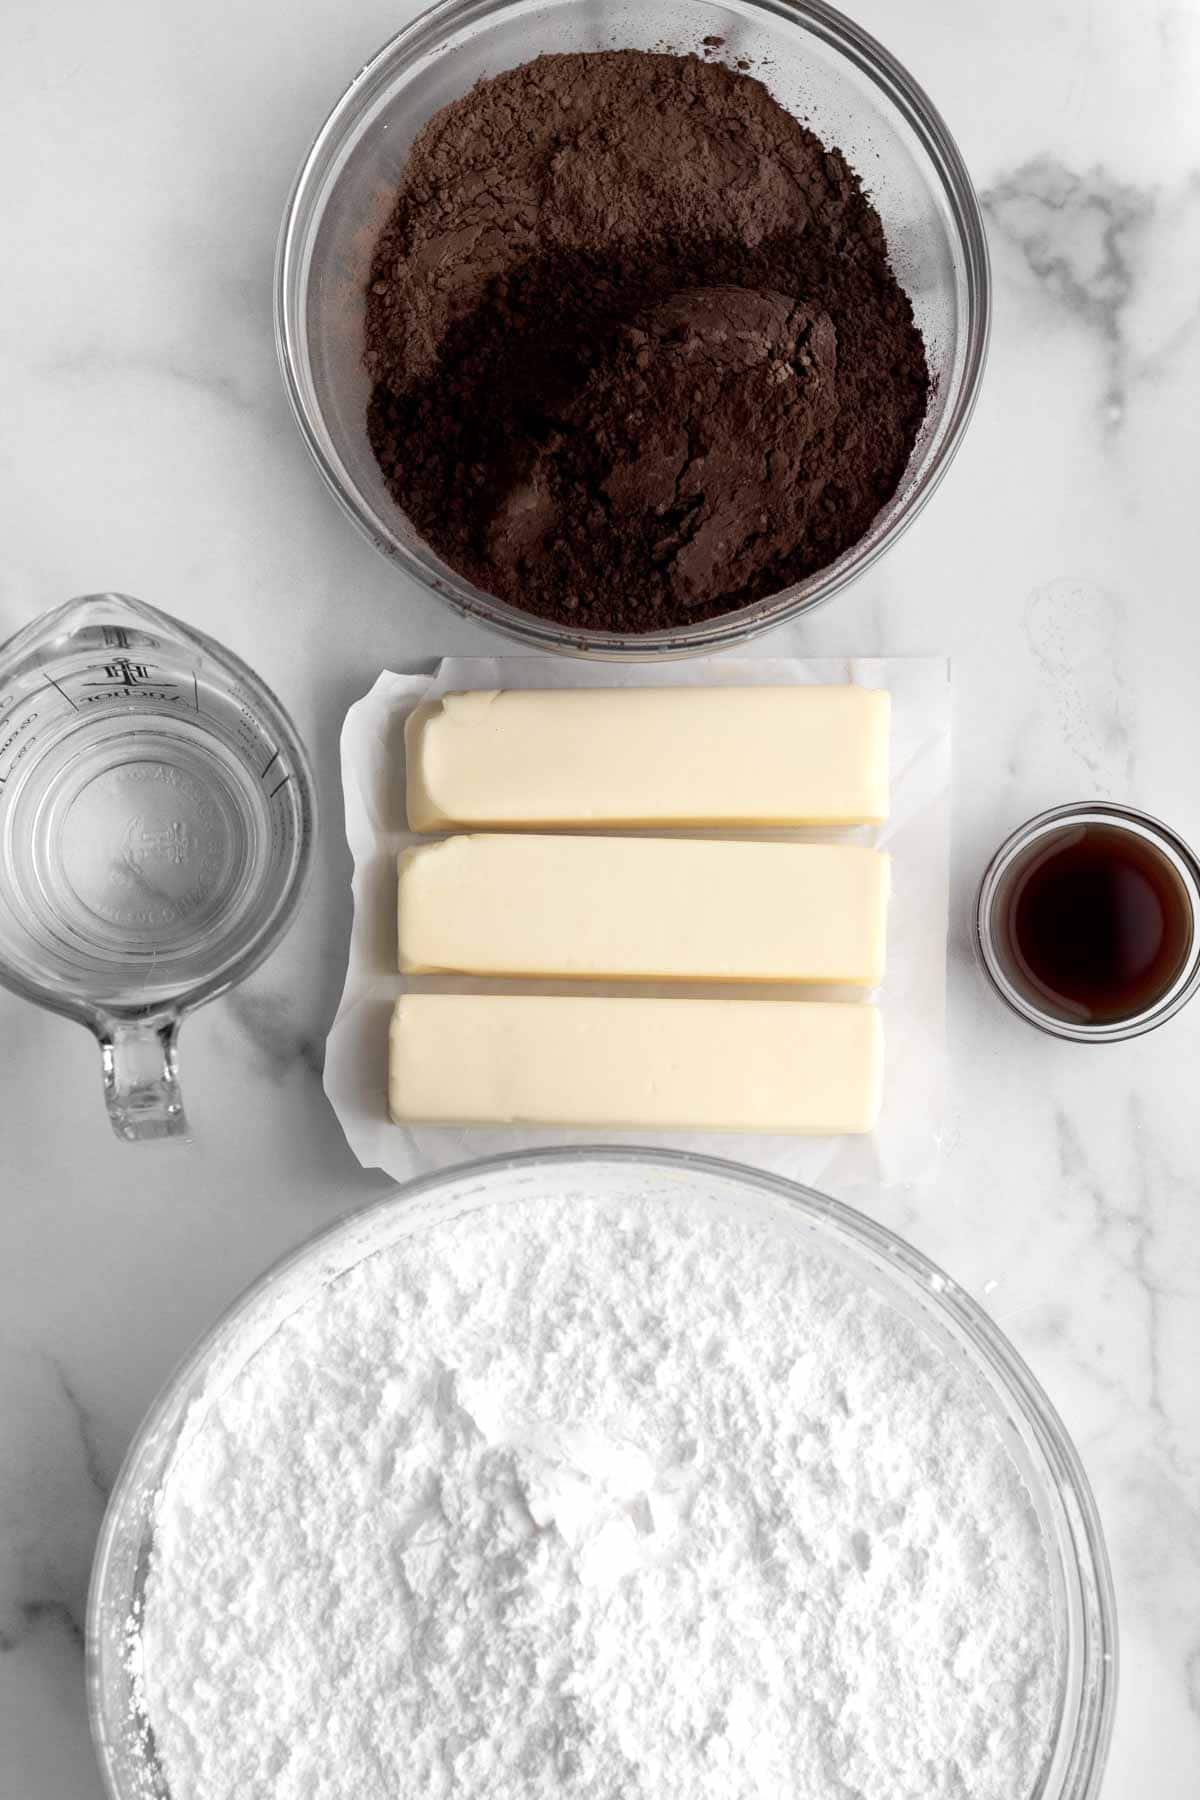 Cocoa powder, 3 sticks of butter, vanilla, water and confectioners’ sugar.